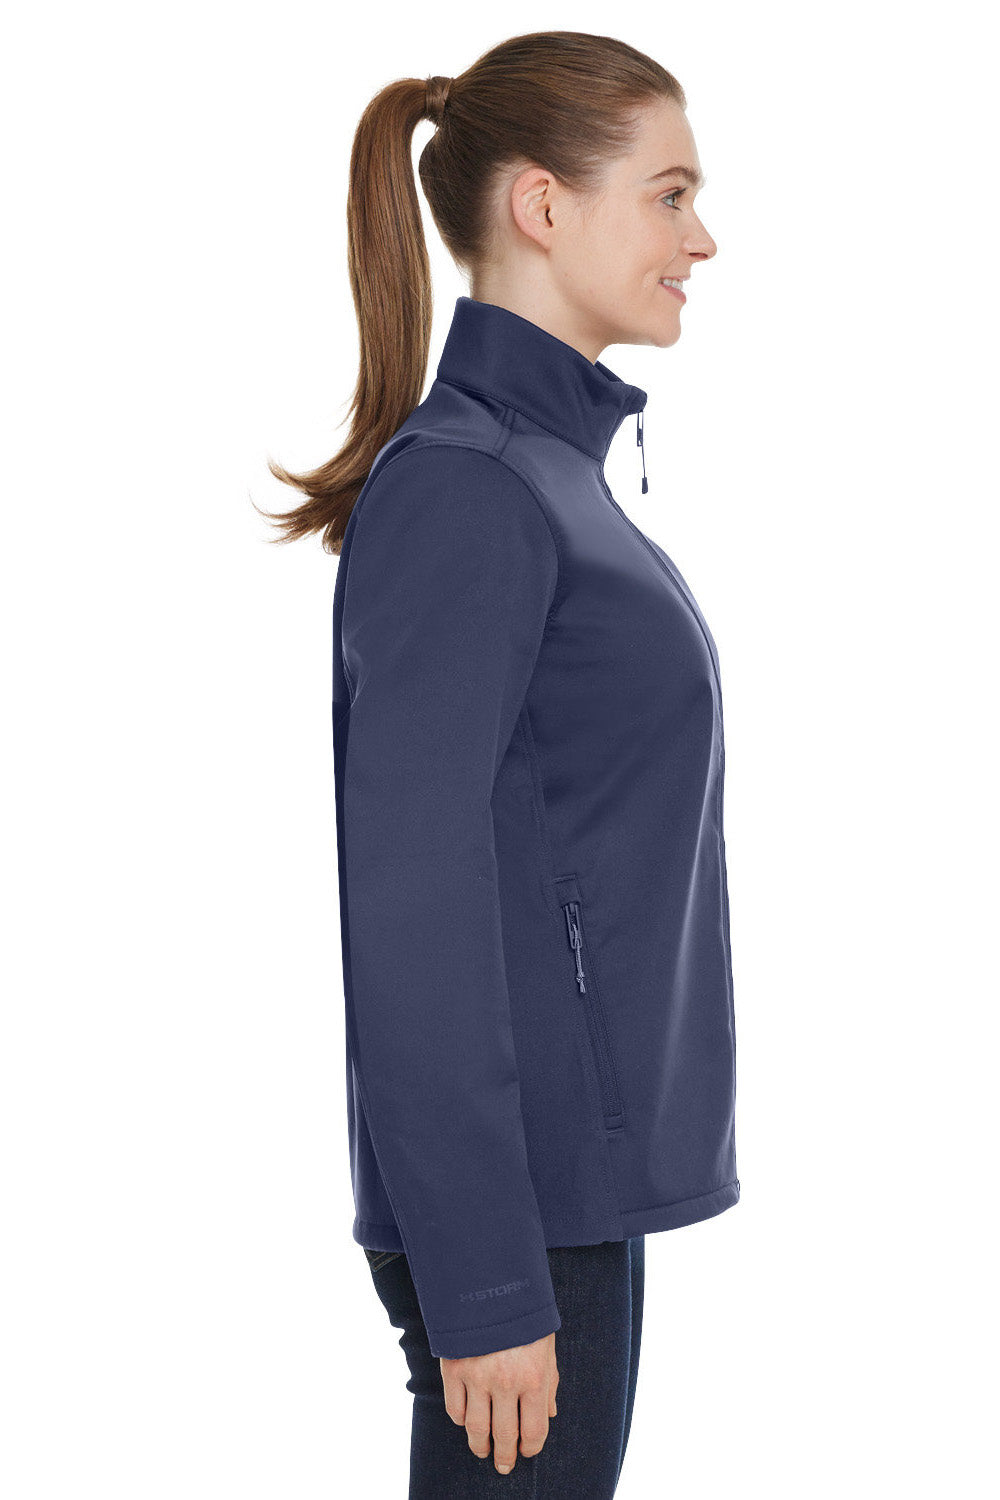 Under Armour 1371594 Womens ColdGear Infrared Shield 2.0 Windproof & Waterproof Full Zip Jacket Midnight Navy Blue Model Side